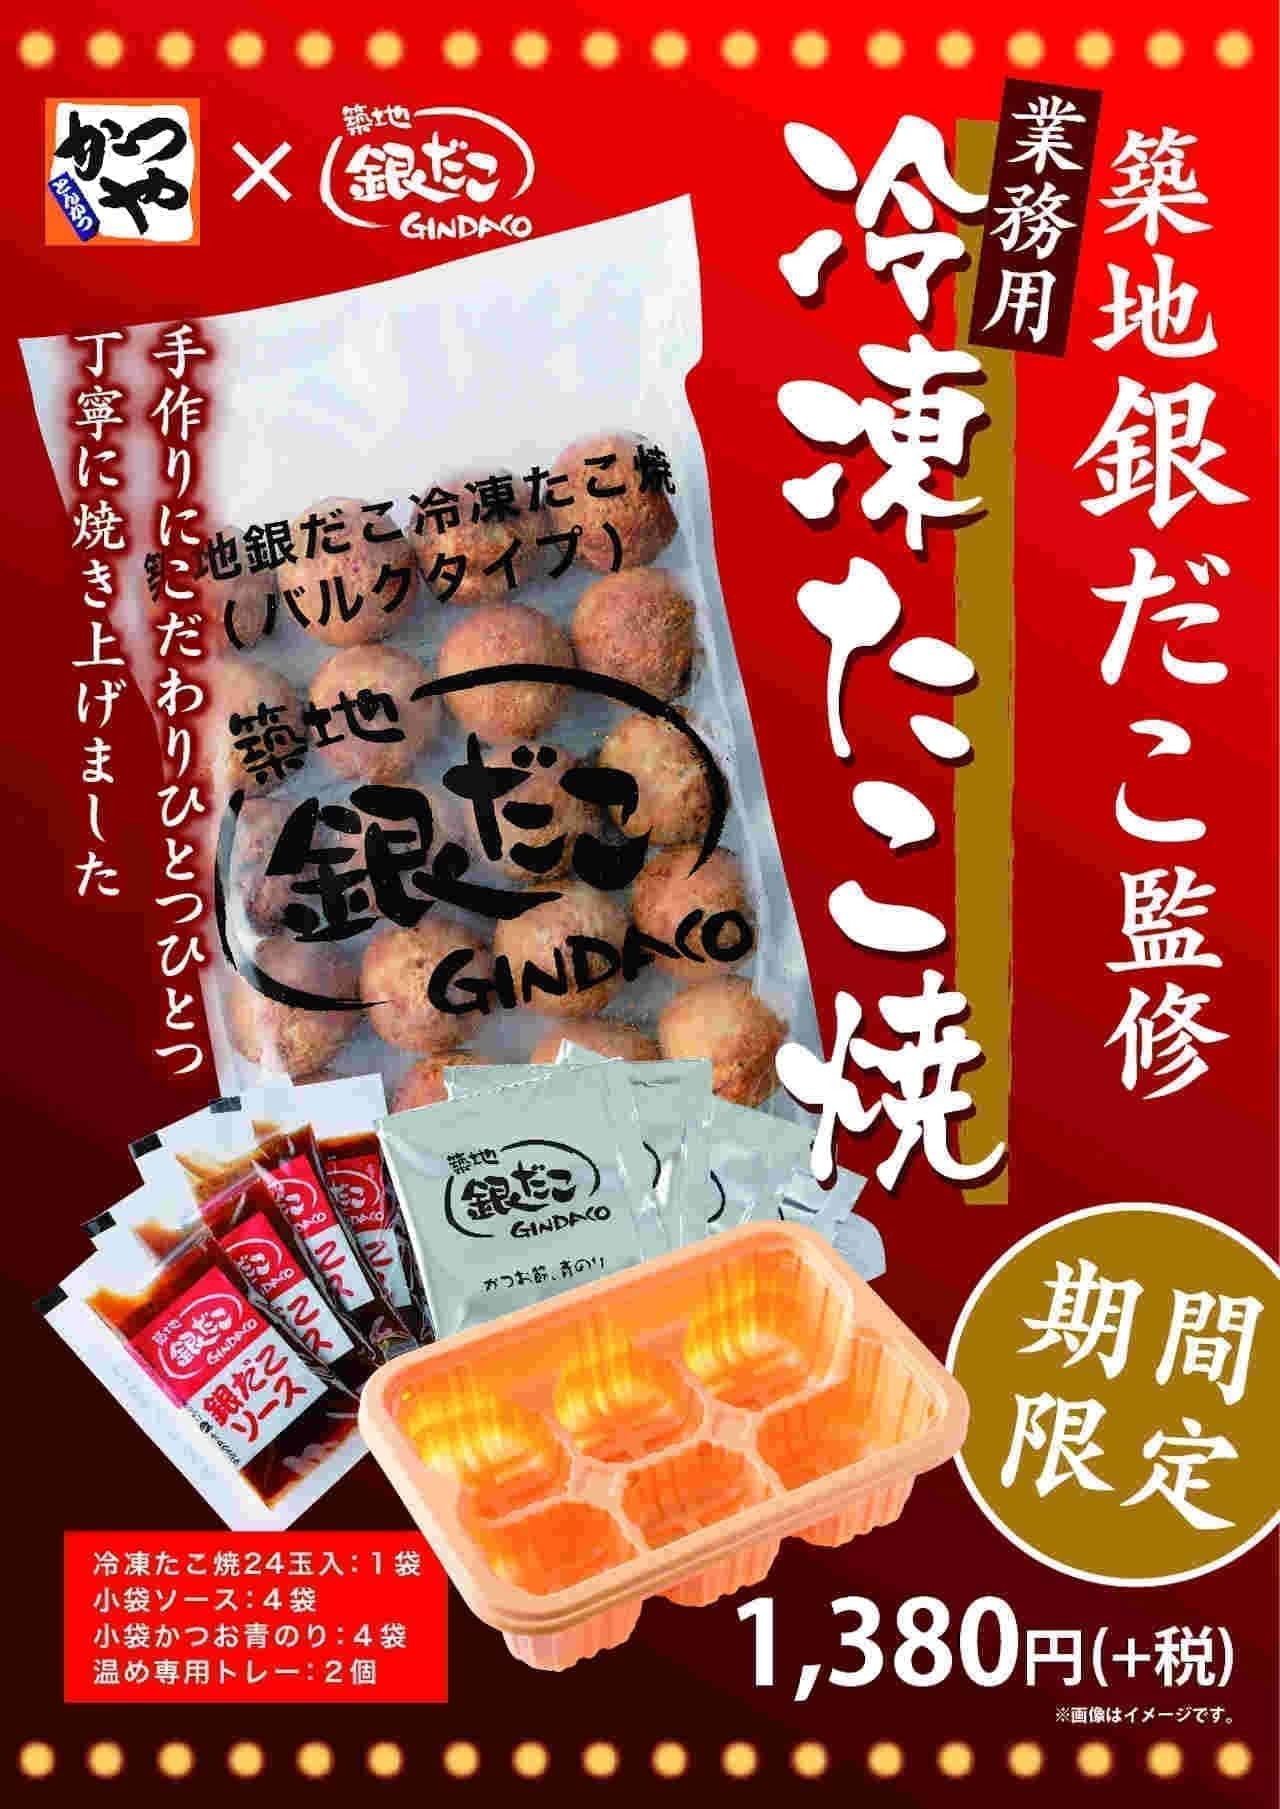 Frozen takoyaki of "Tsukiji Gindaco" appears in Katsuya's To go